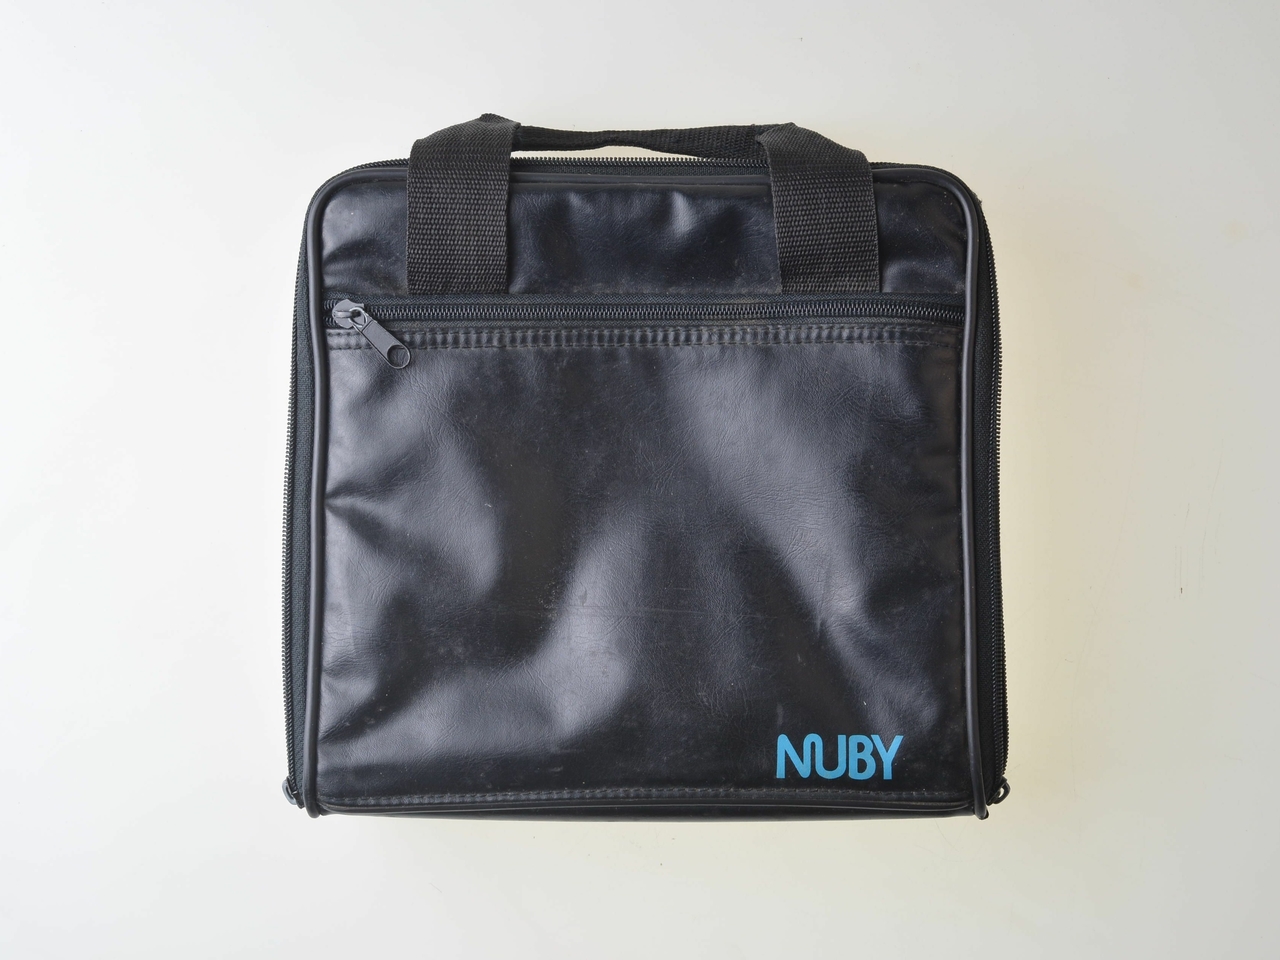 Nuby Nintendo Gameboy Classic Bag - Gameboy Classic Hardware